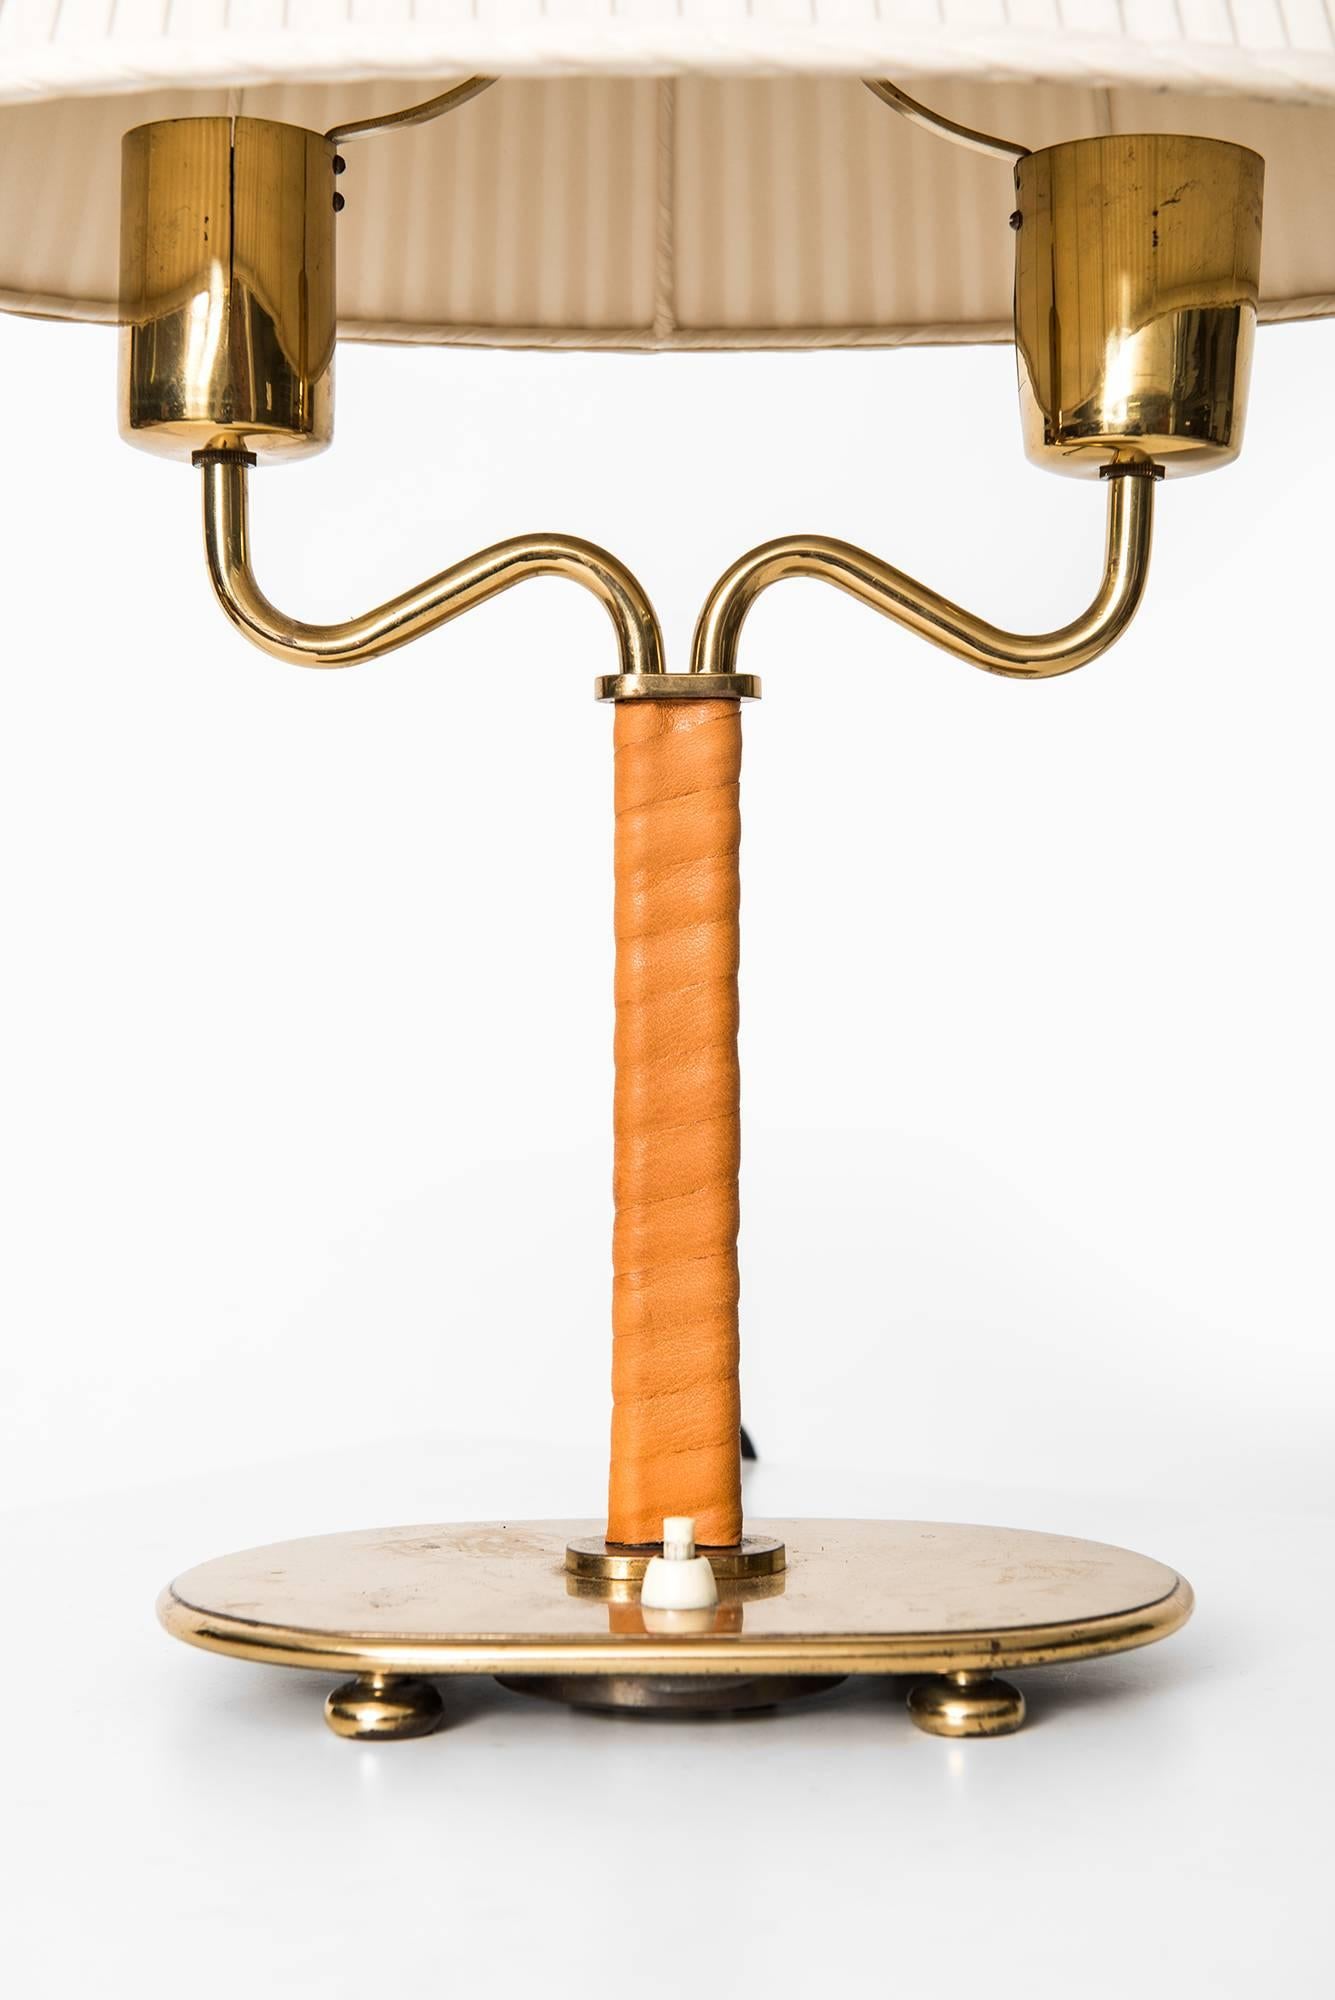 Rare table lamp model 2388 designed by Josef Frank. Produced by Svenskt Tenn in Sweden.